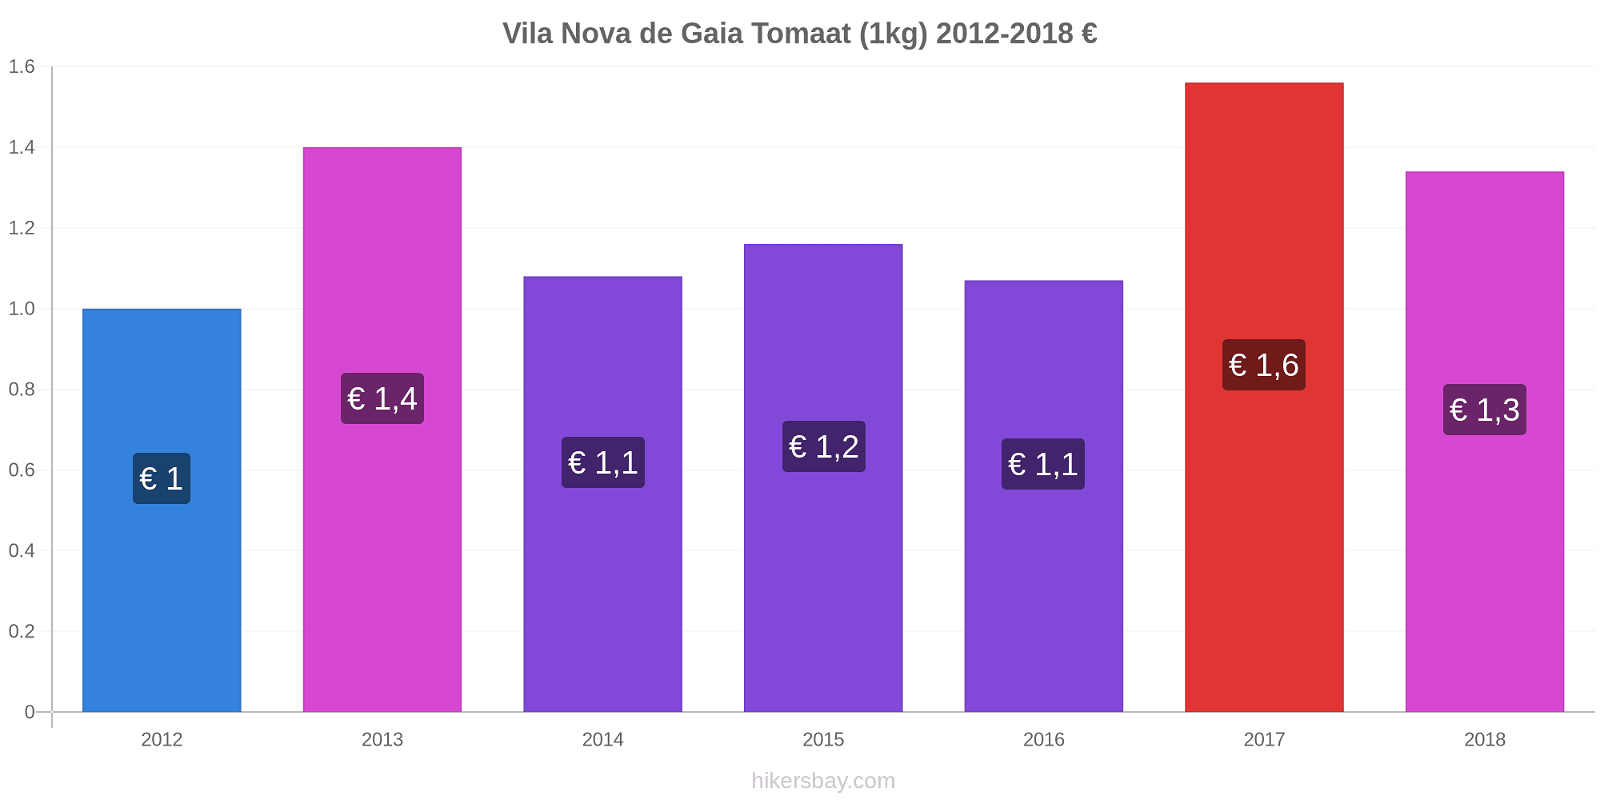 Vila Nova de Gaia prijswijzigingen Tomaat (1kg) hikersbay.com